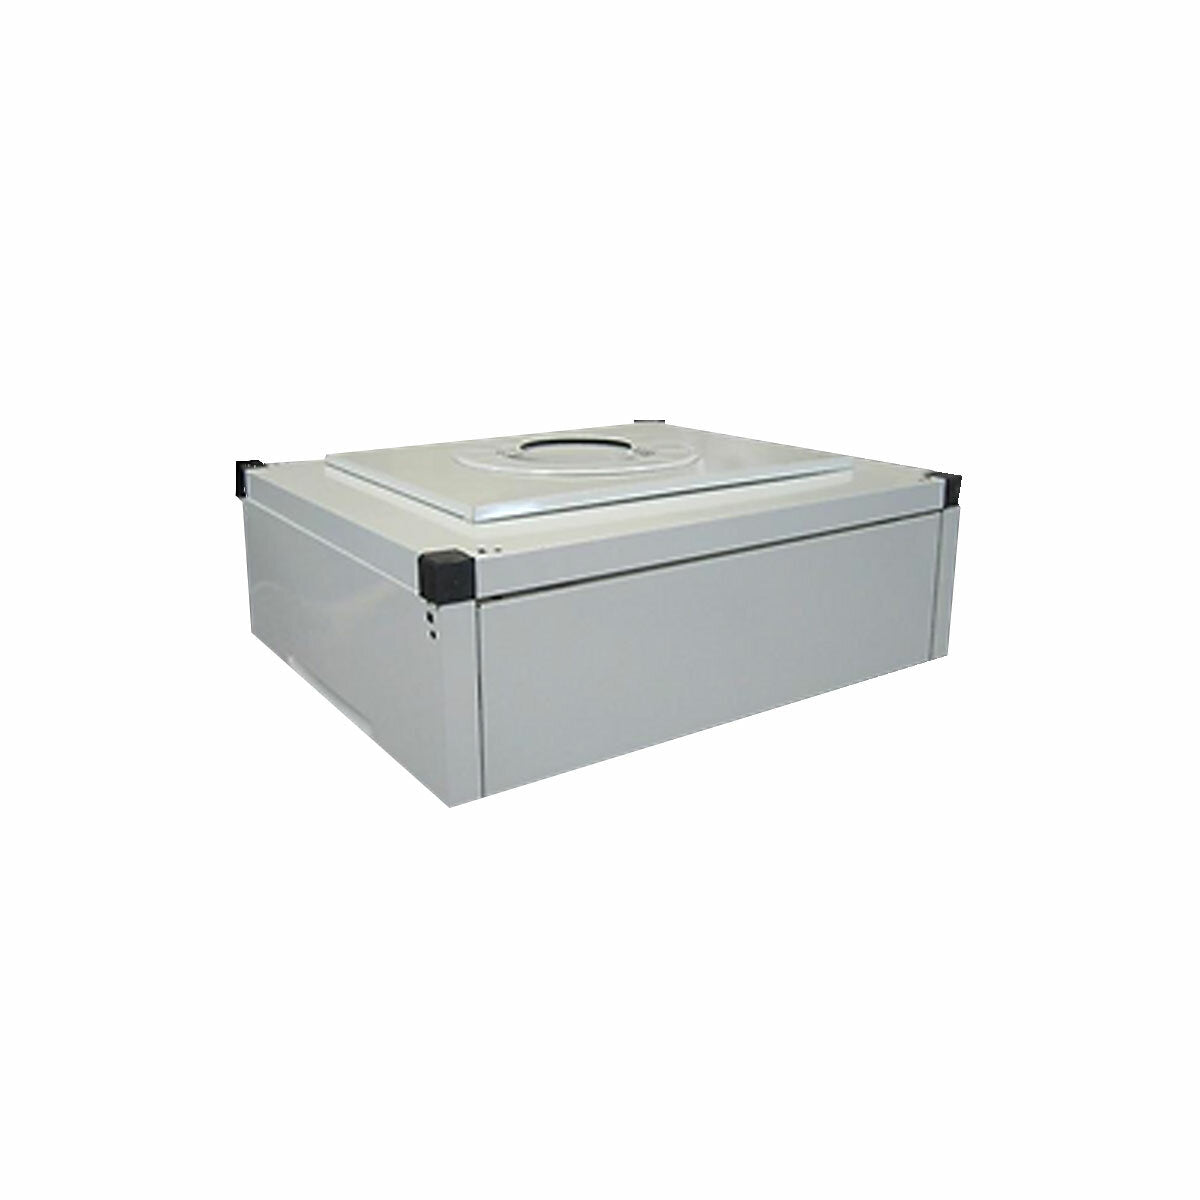 White universal water heater cover boiler cover box H 100 cm - W 55 cm - D 43 cm